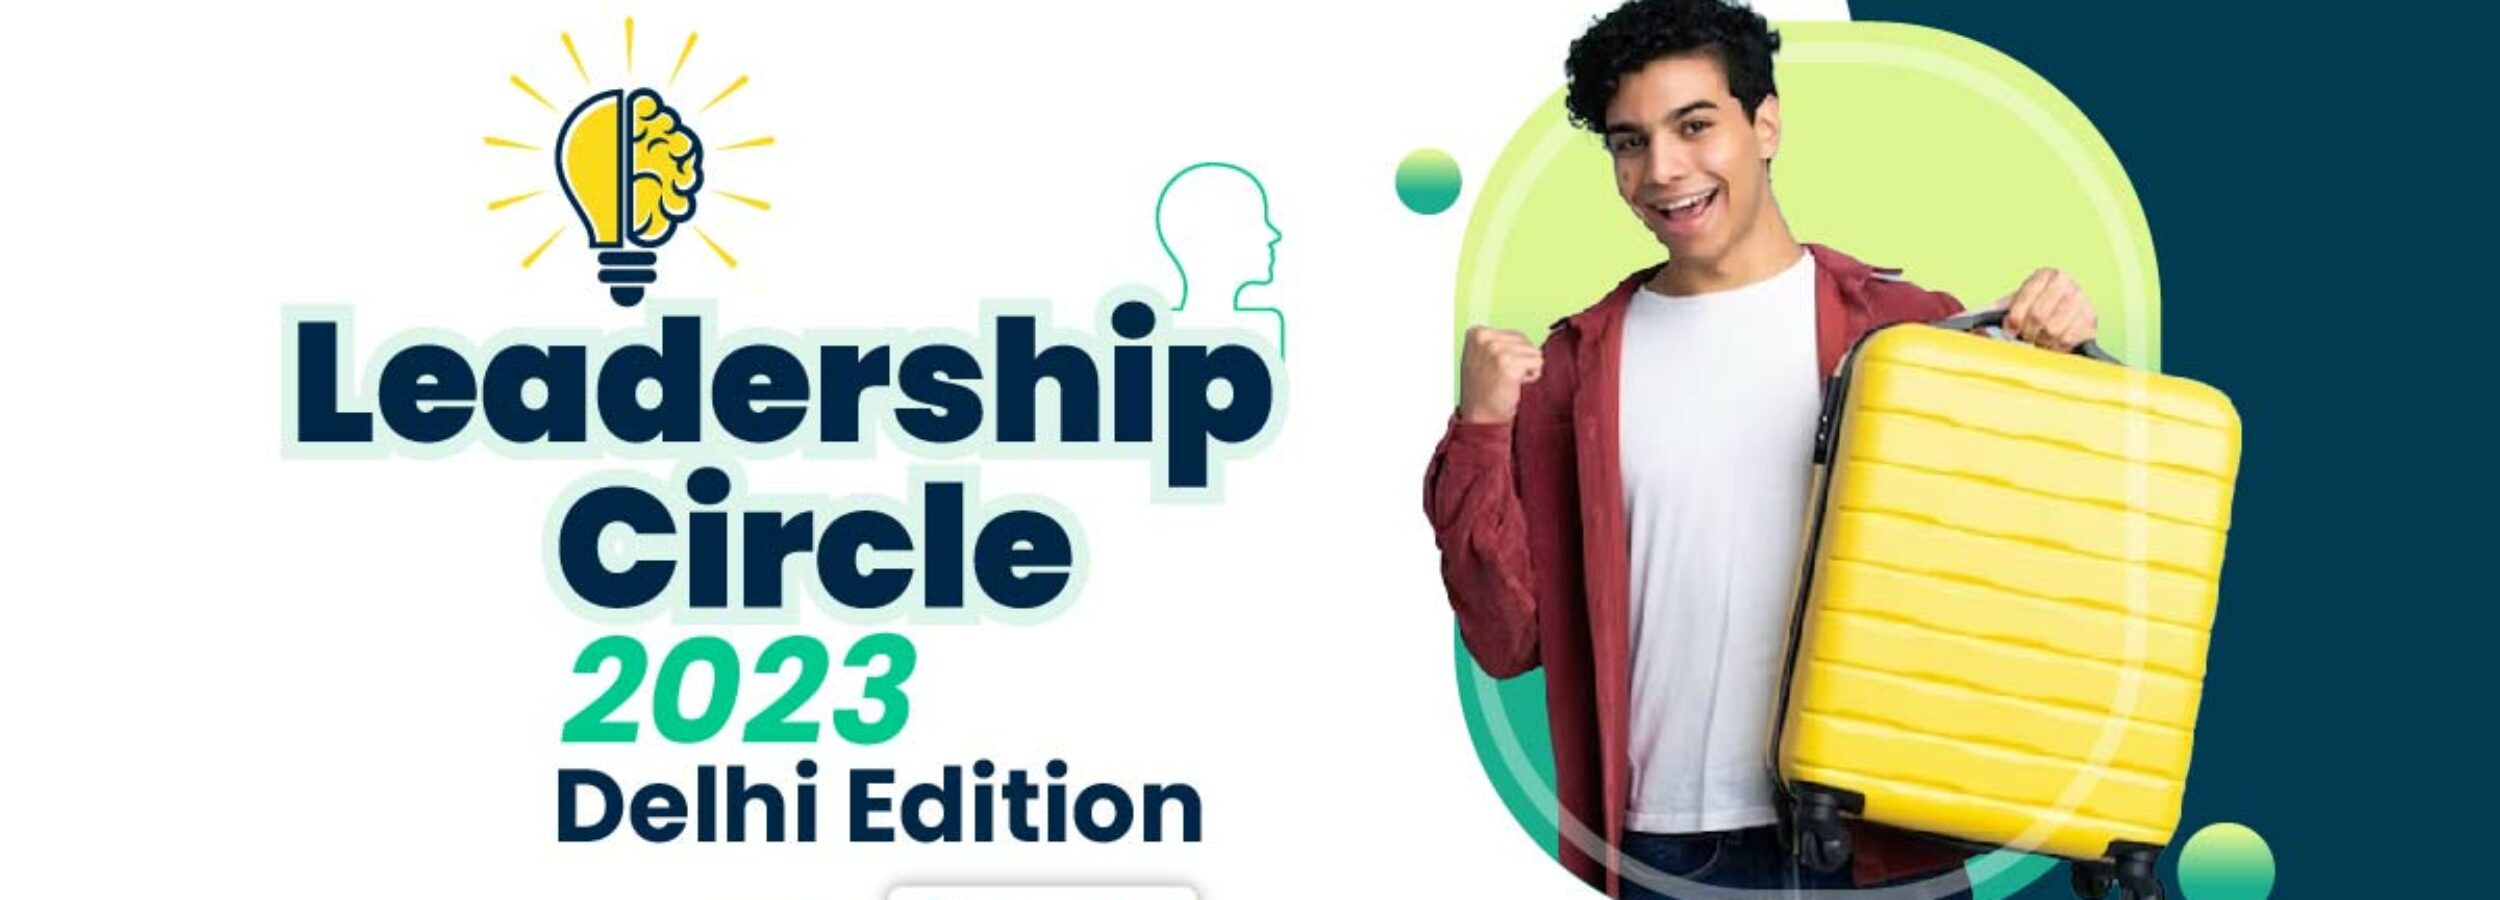 Leadership Circle 2023